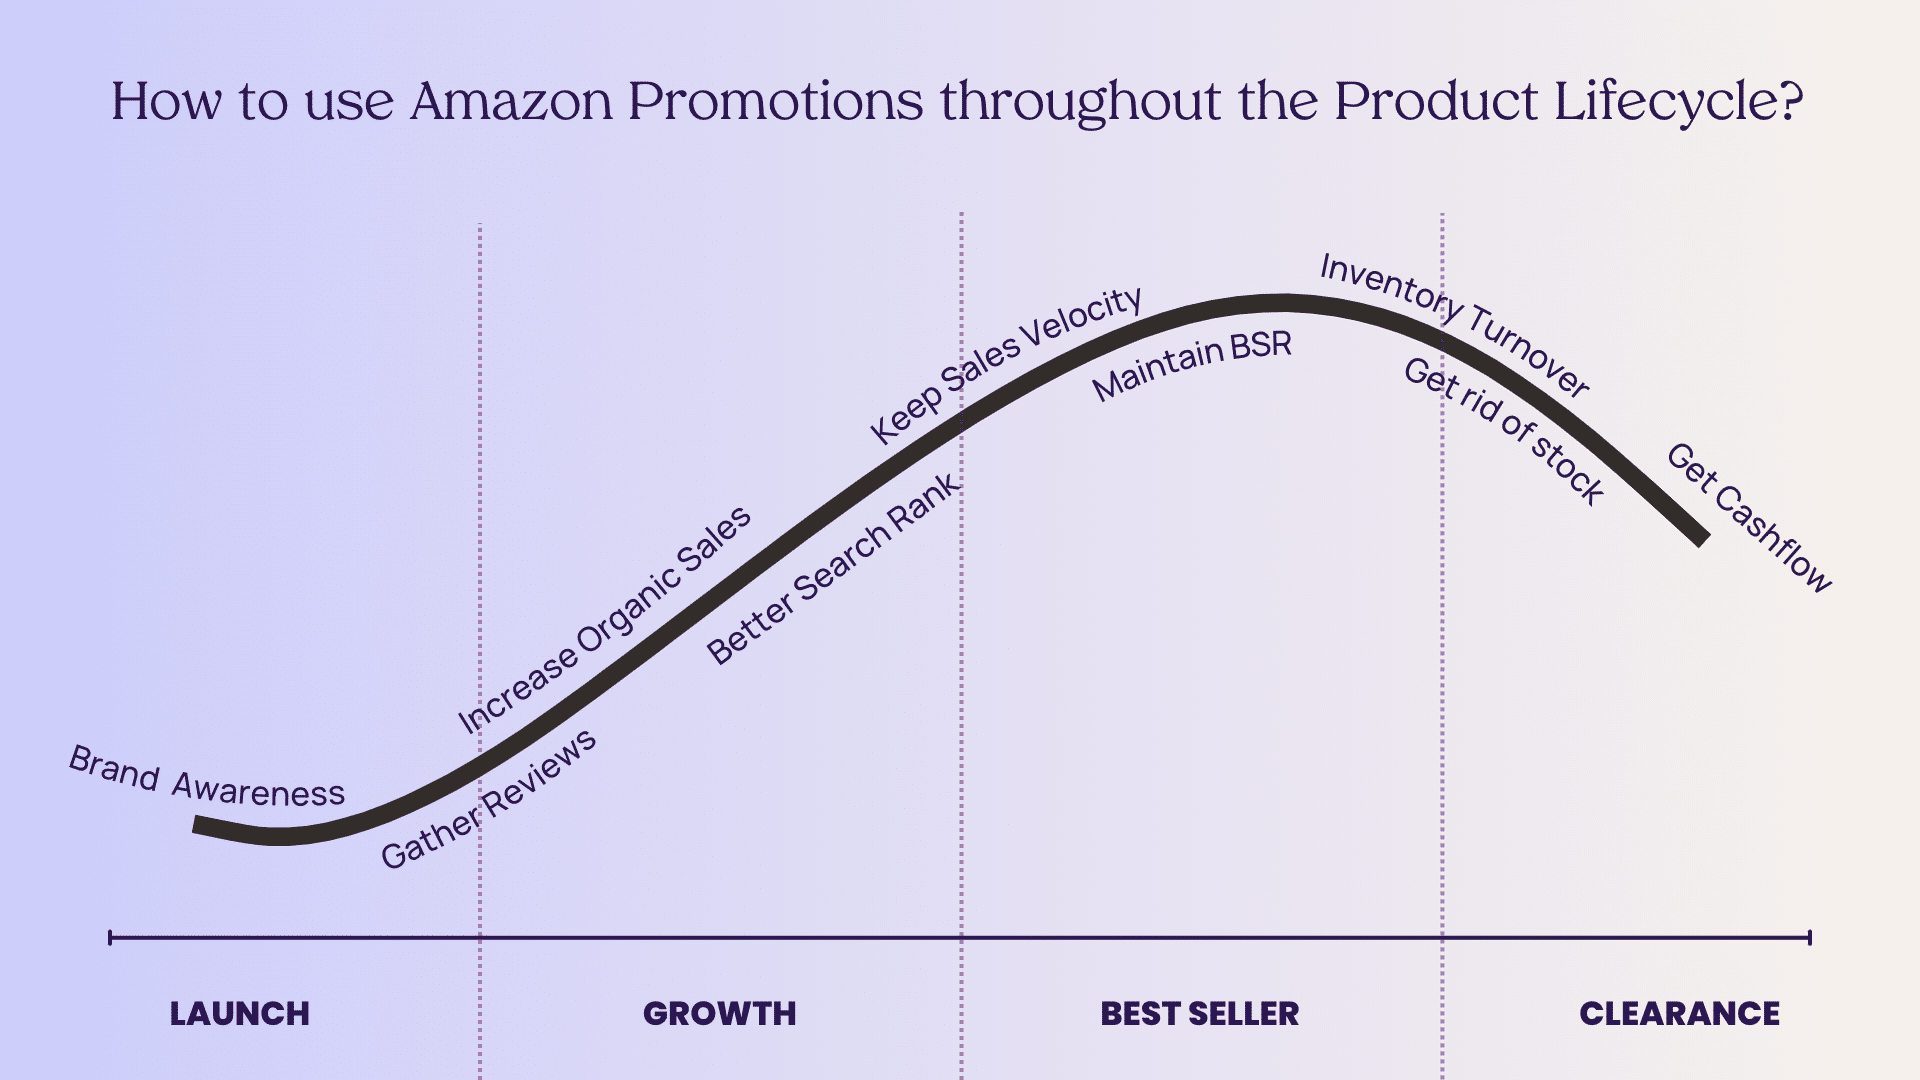 Amazon Promotions (4Ps): Establish Your Growing Brand 